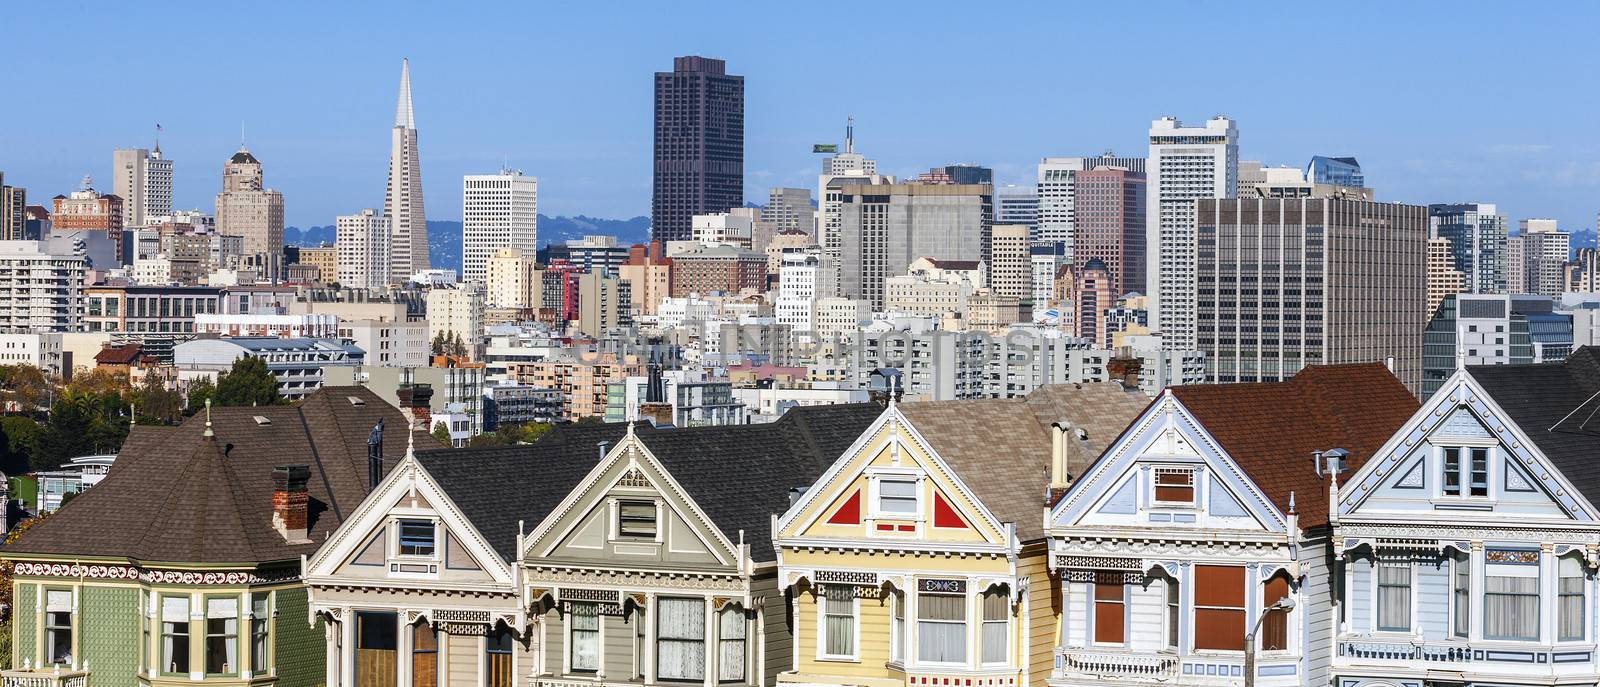 Panoramic view of San Francisco by vwalakte